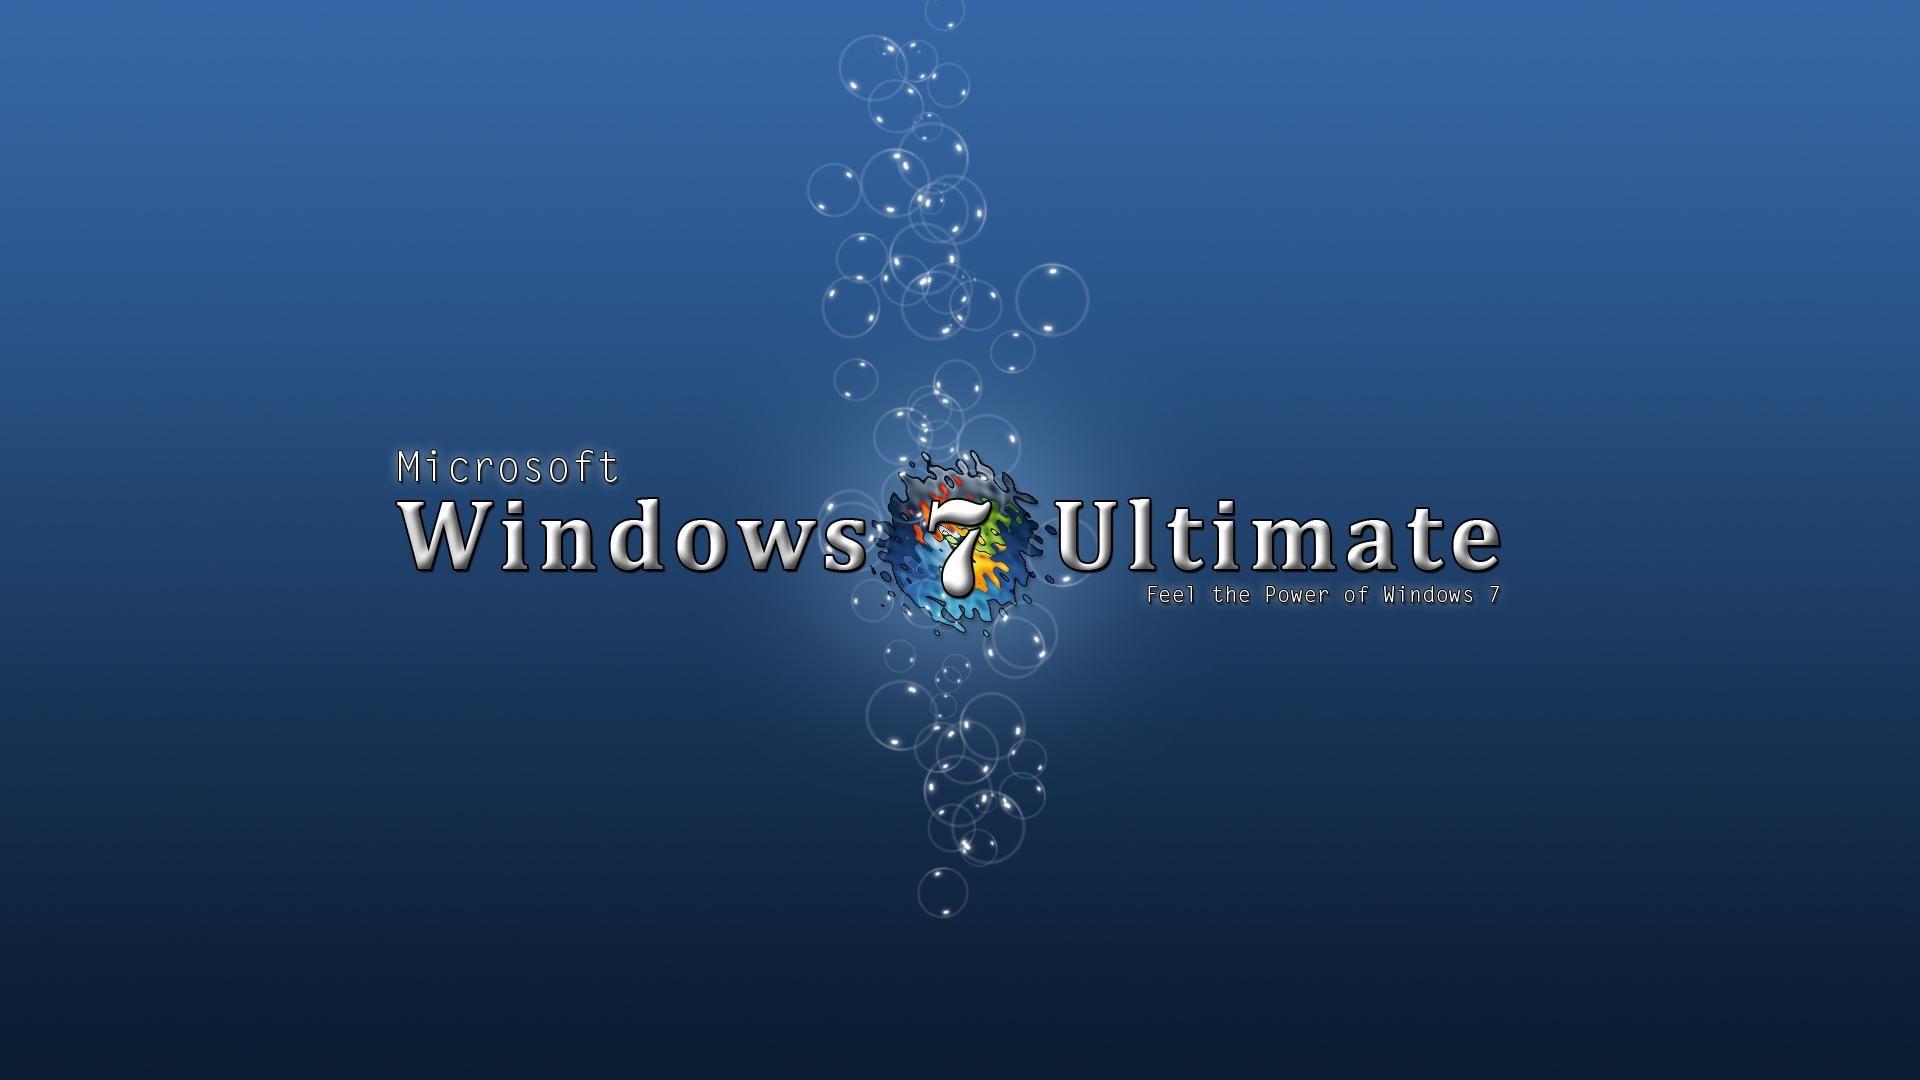 Spectacular Windows 7 Ultimate Wallpaper 1920×1080 33 In windows